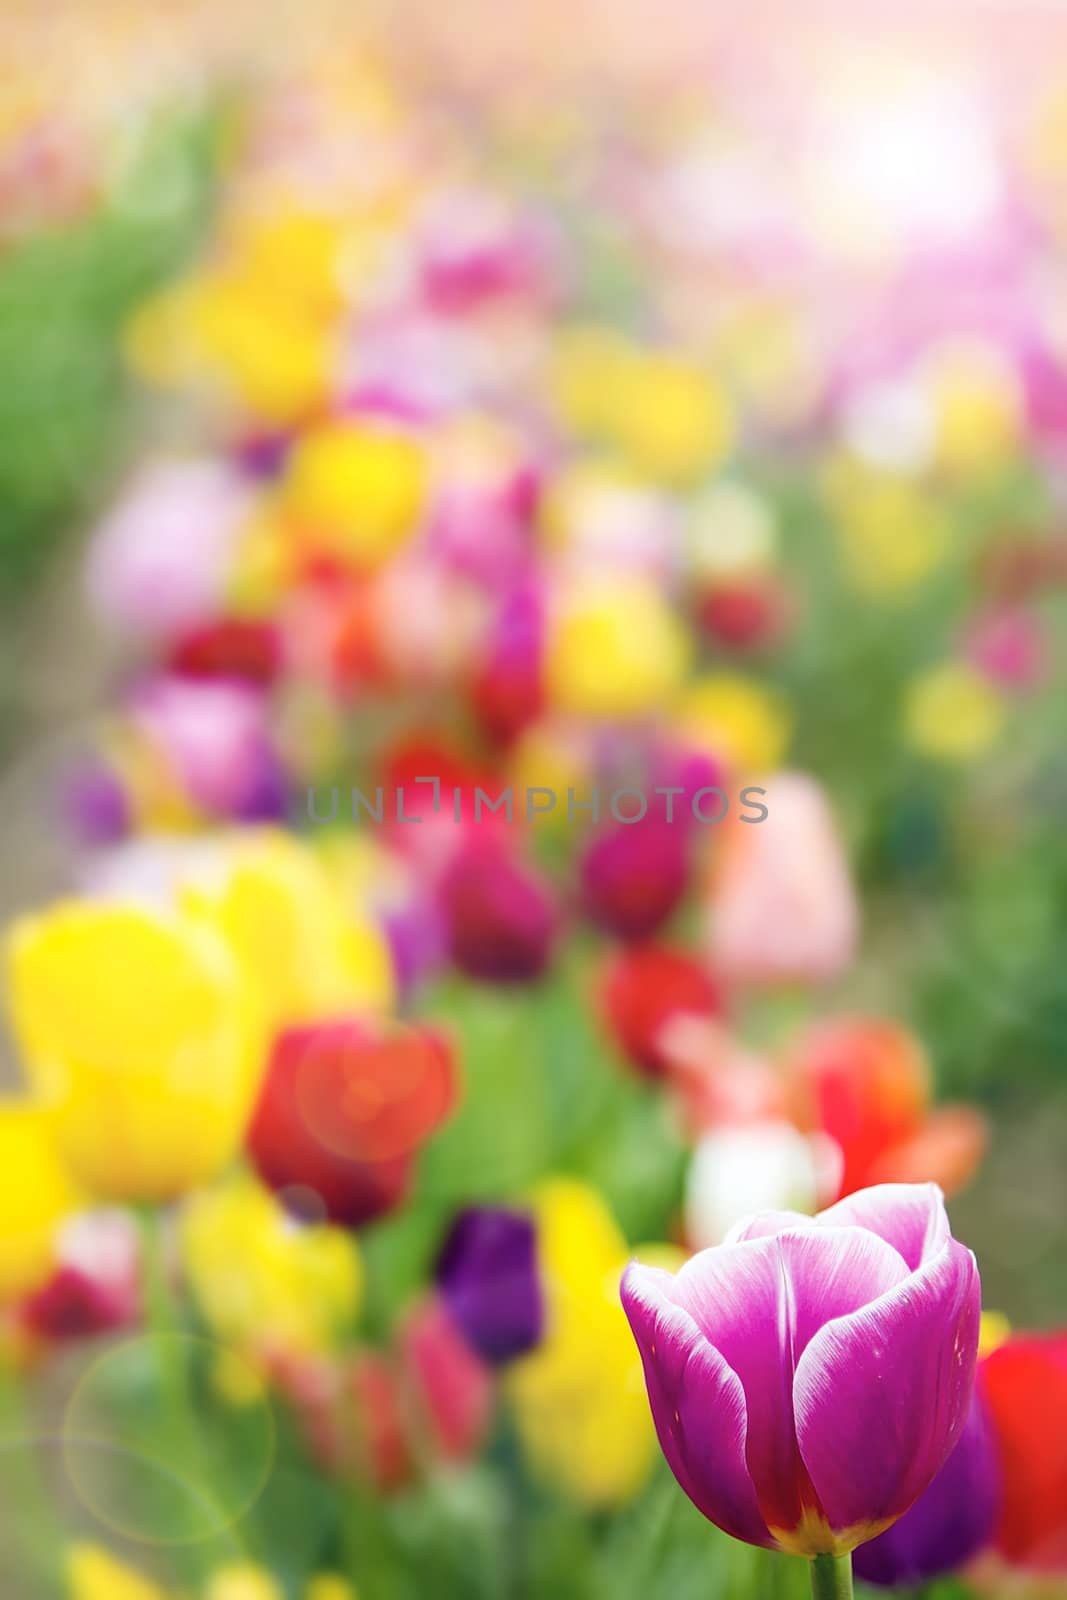 Field of Colorful Tulip Flowers in Spring Season with Defocused Blurred Background